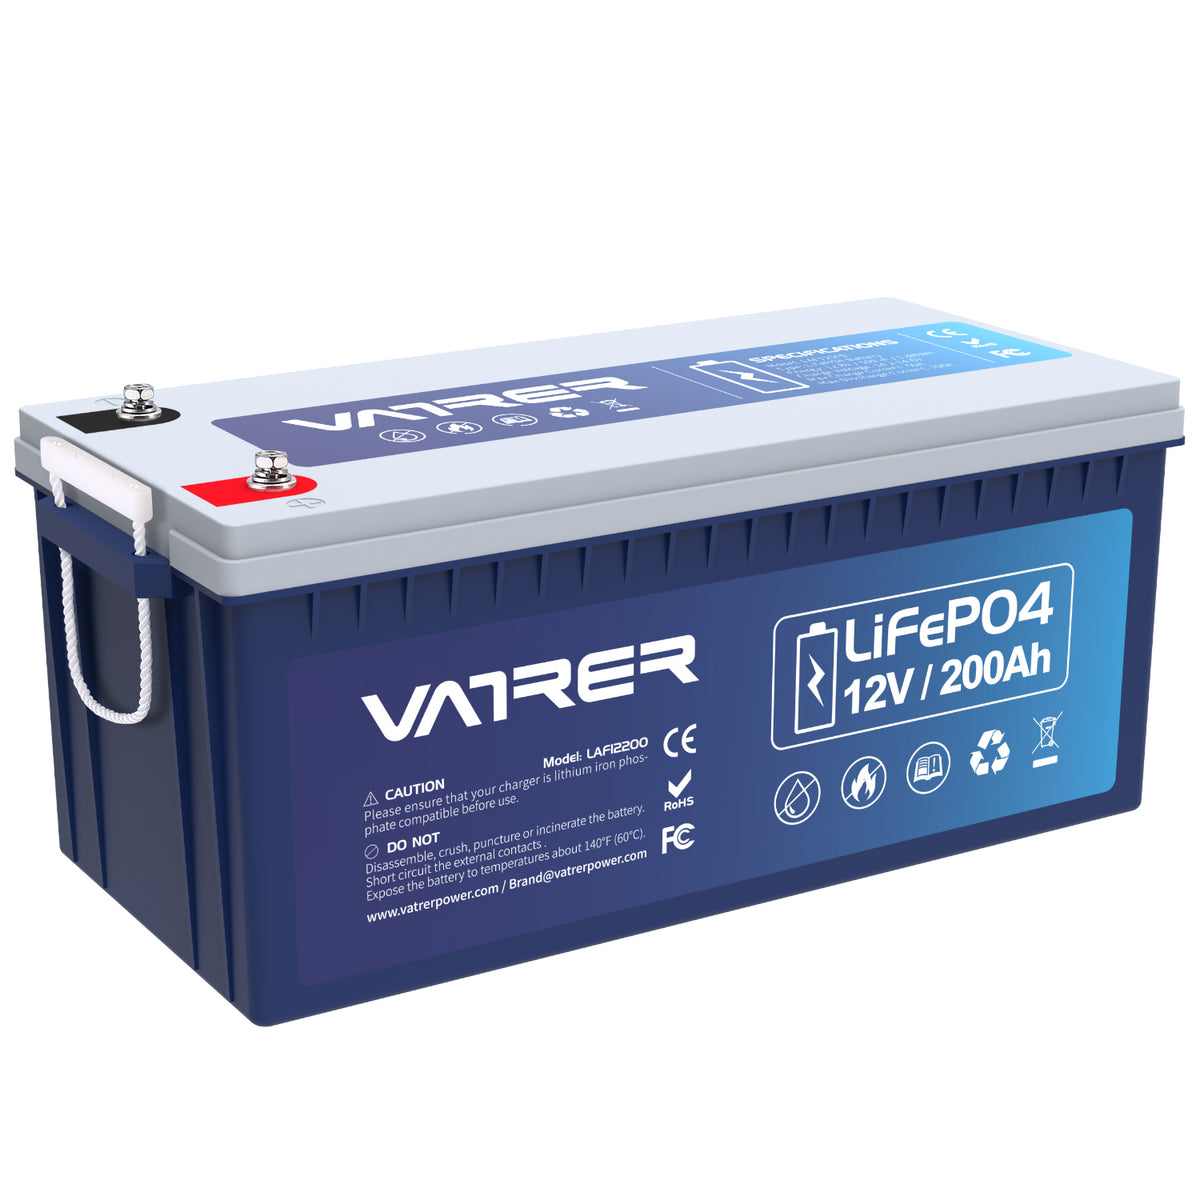 <tc>Vatrer</tc> 12 V 200 Ah LiFePO4-Lithiumbatterie, integriertes 100 A BMS und LiFePO4-Batterien mit Abschaltung bei niedriger Temperatur